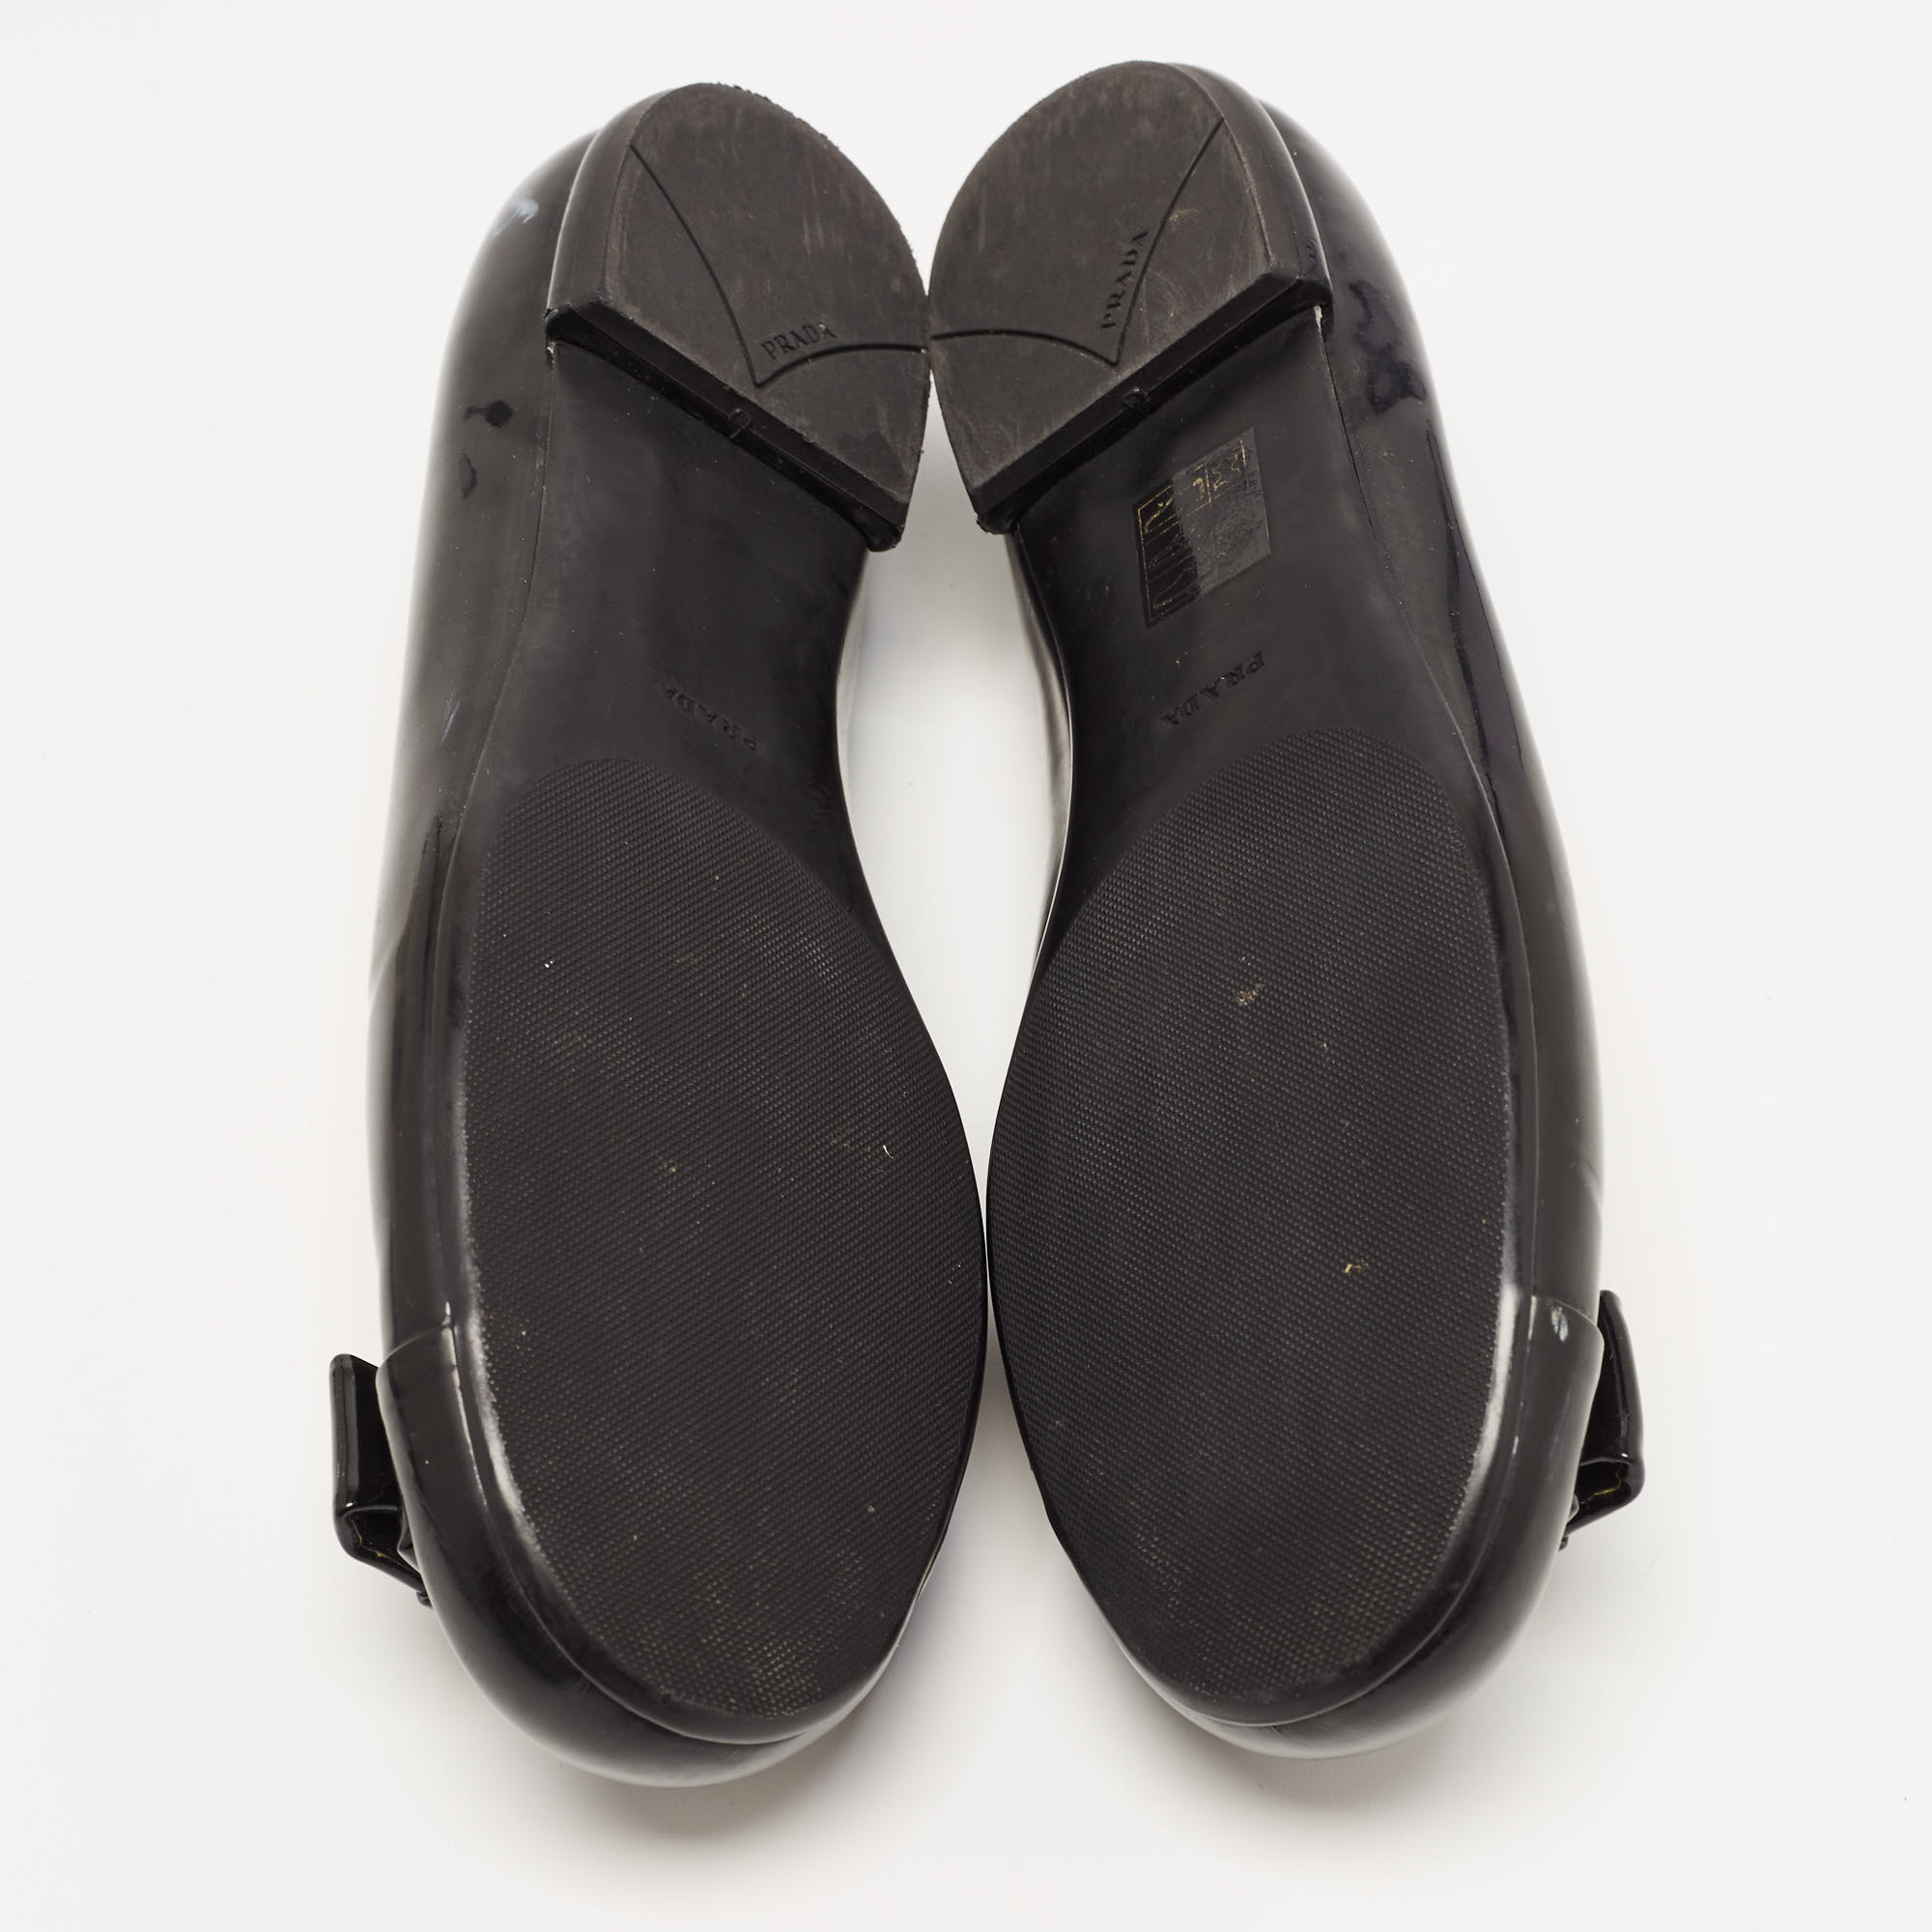 Prada Black Patent Leather Bow Ballet Flats Size 38